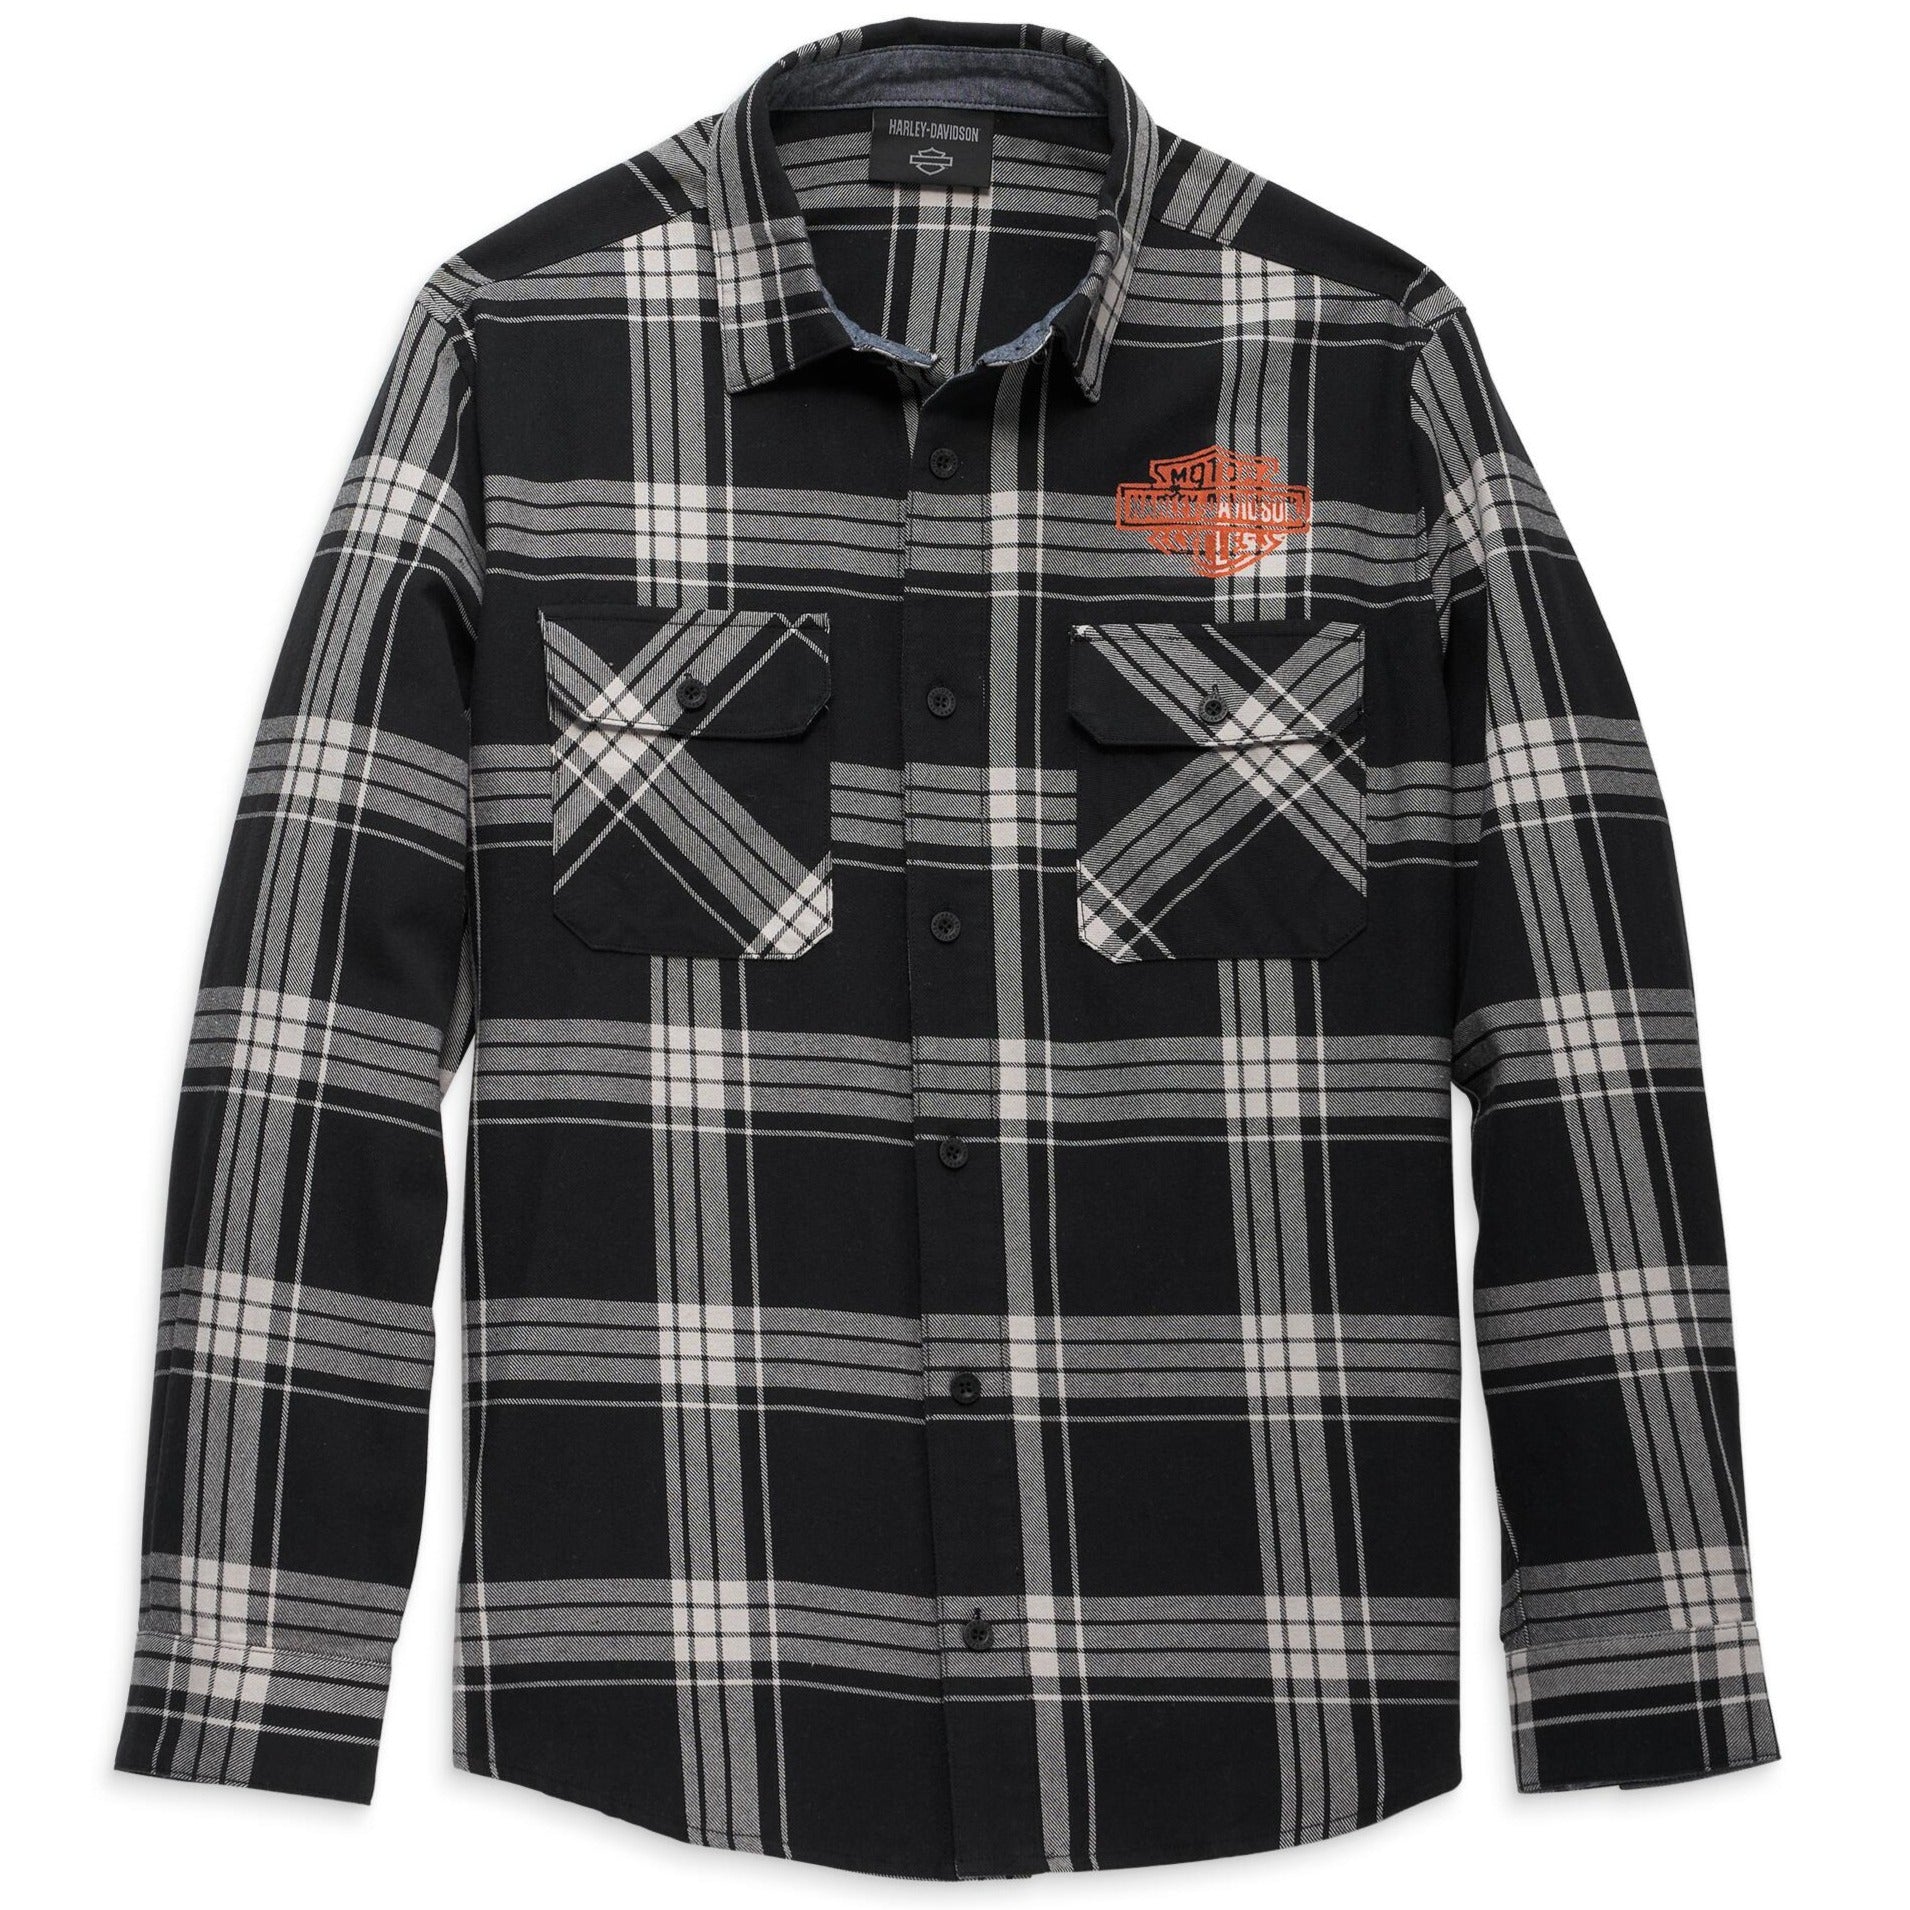 Harley-Davidson Men's Road Captain Long Sleeve Shirt, Black Plaid, 96145-23VM (front)